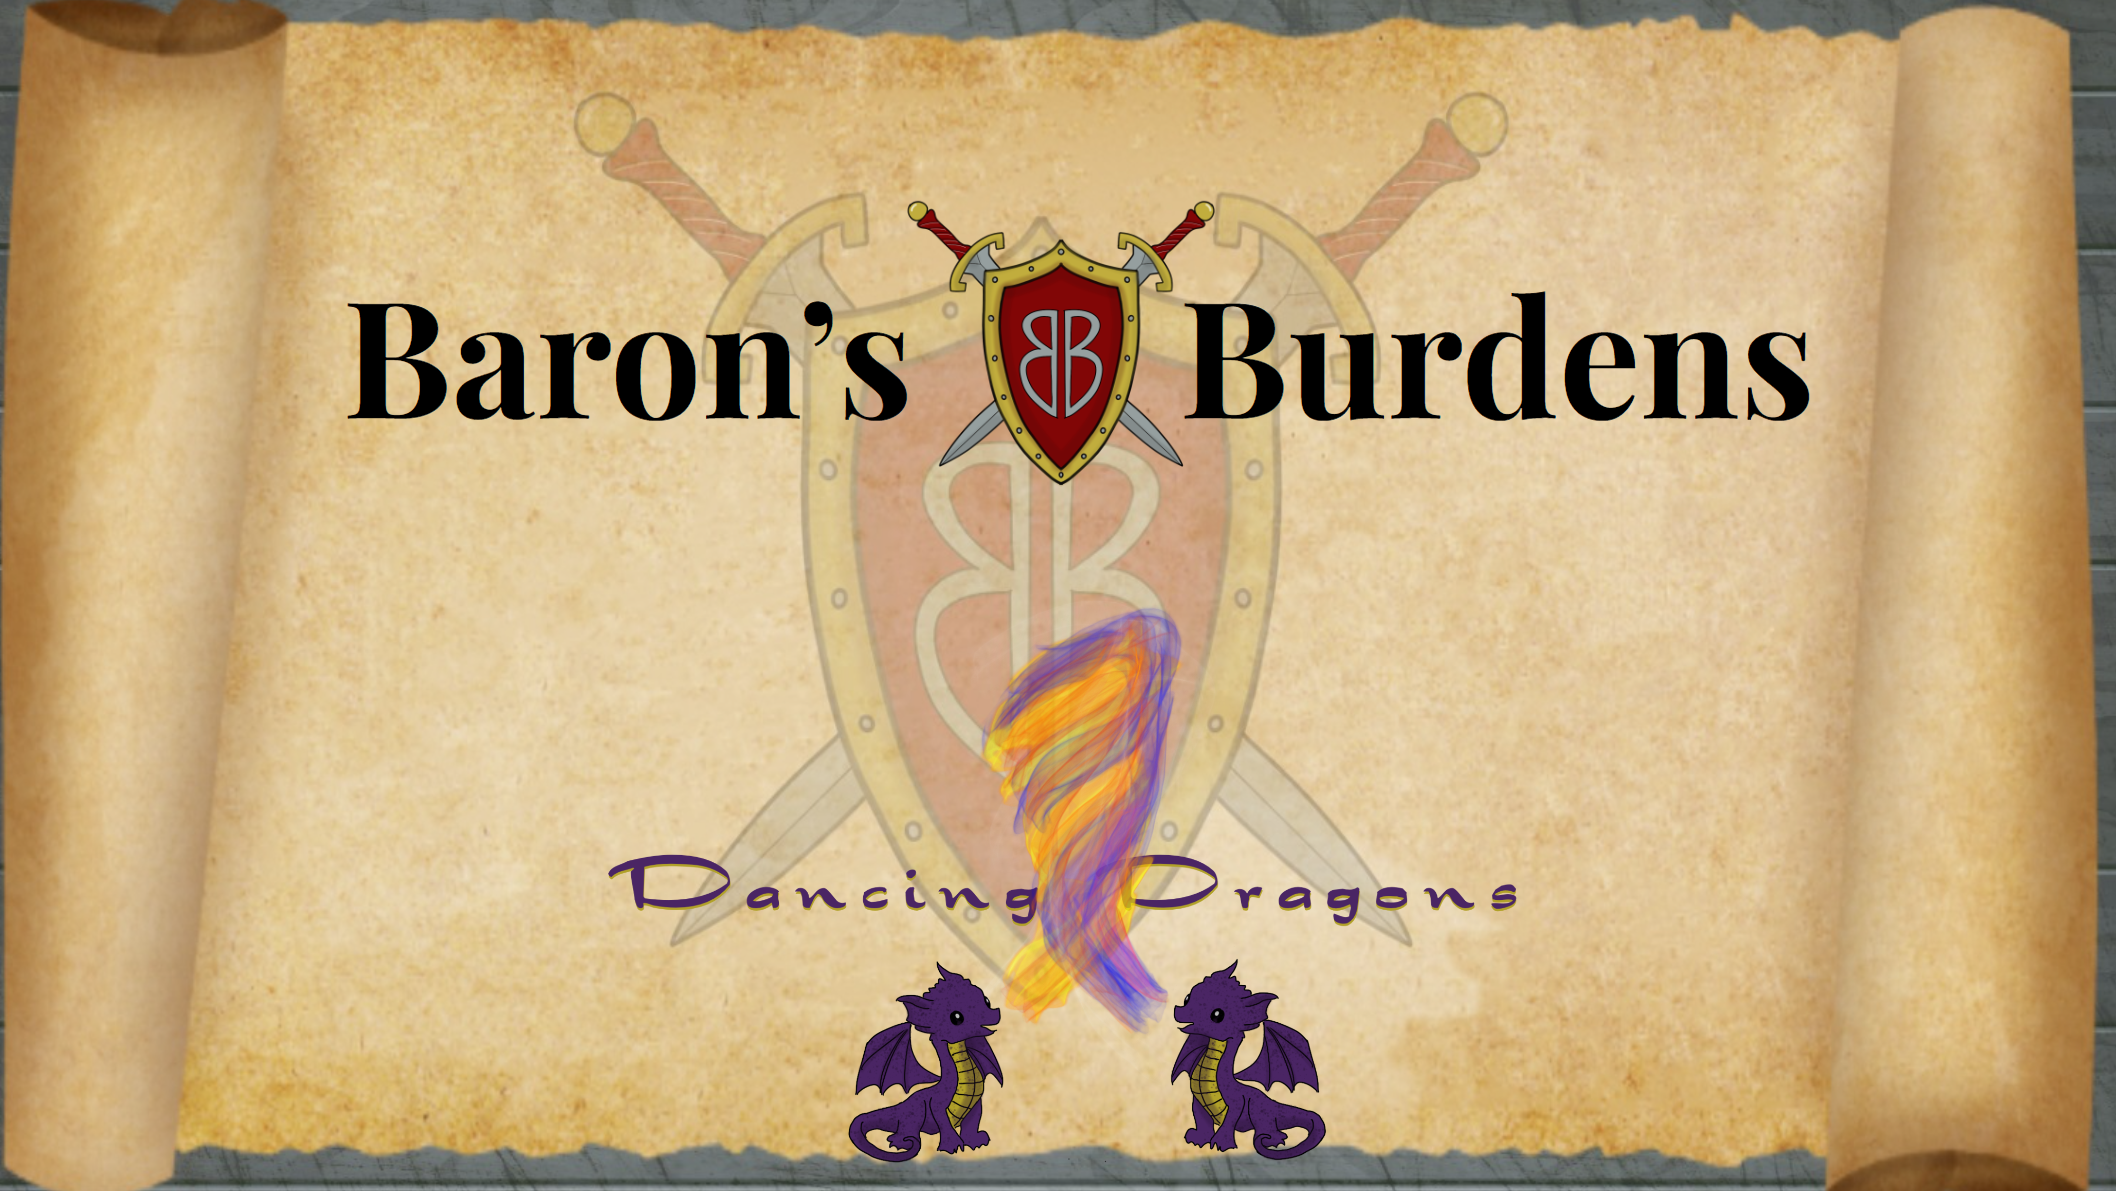 Baron's Burdens